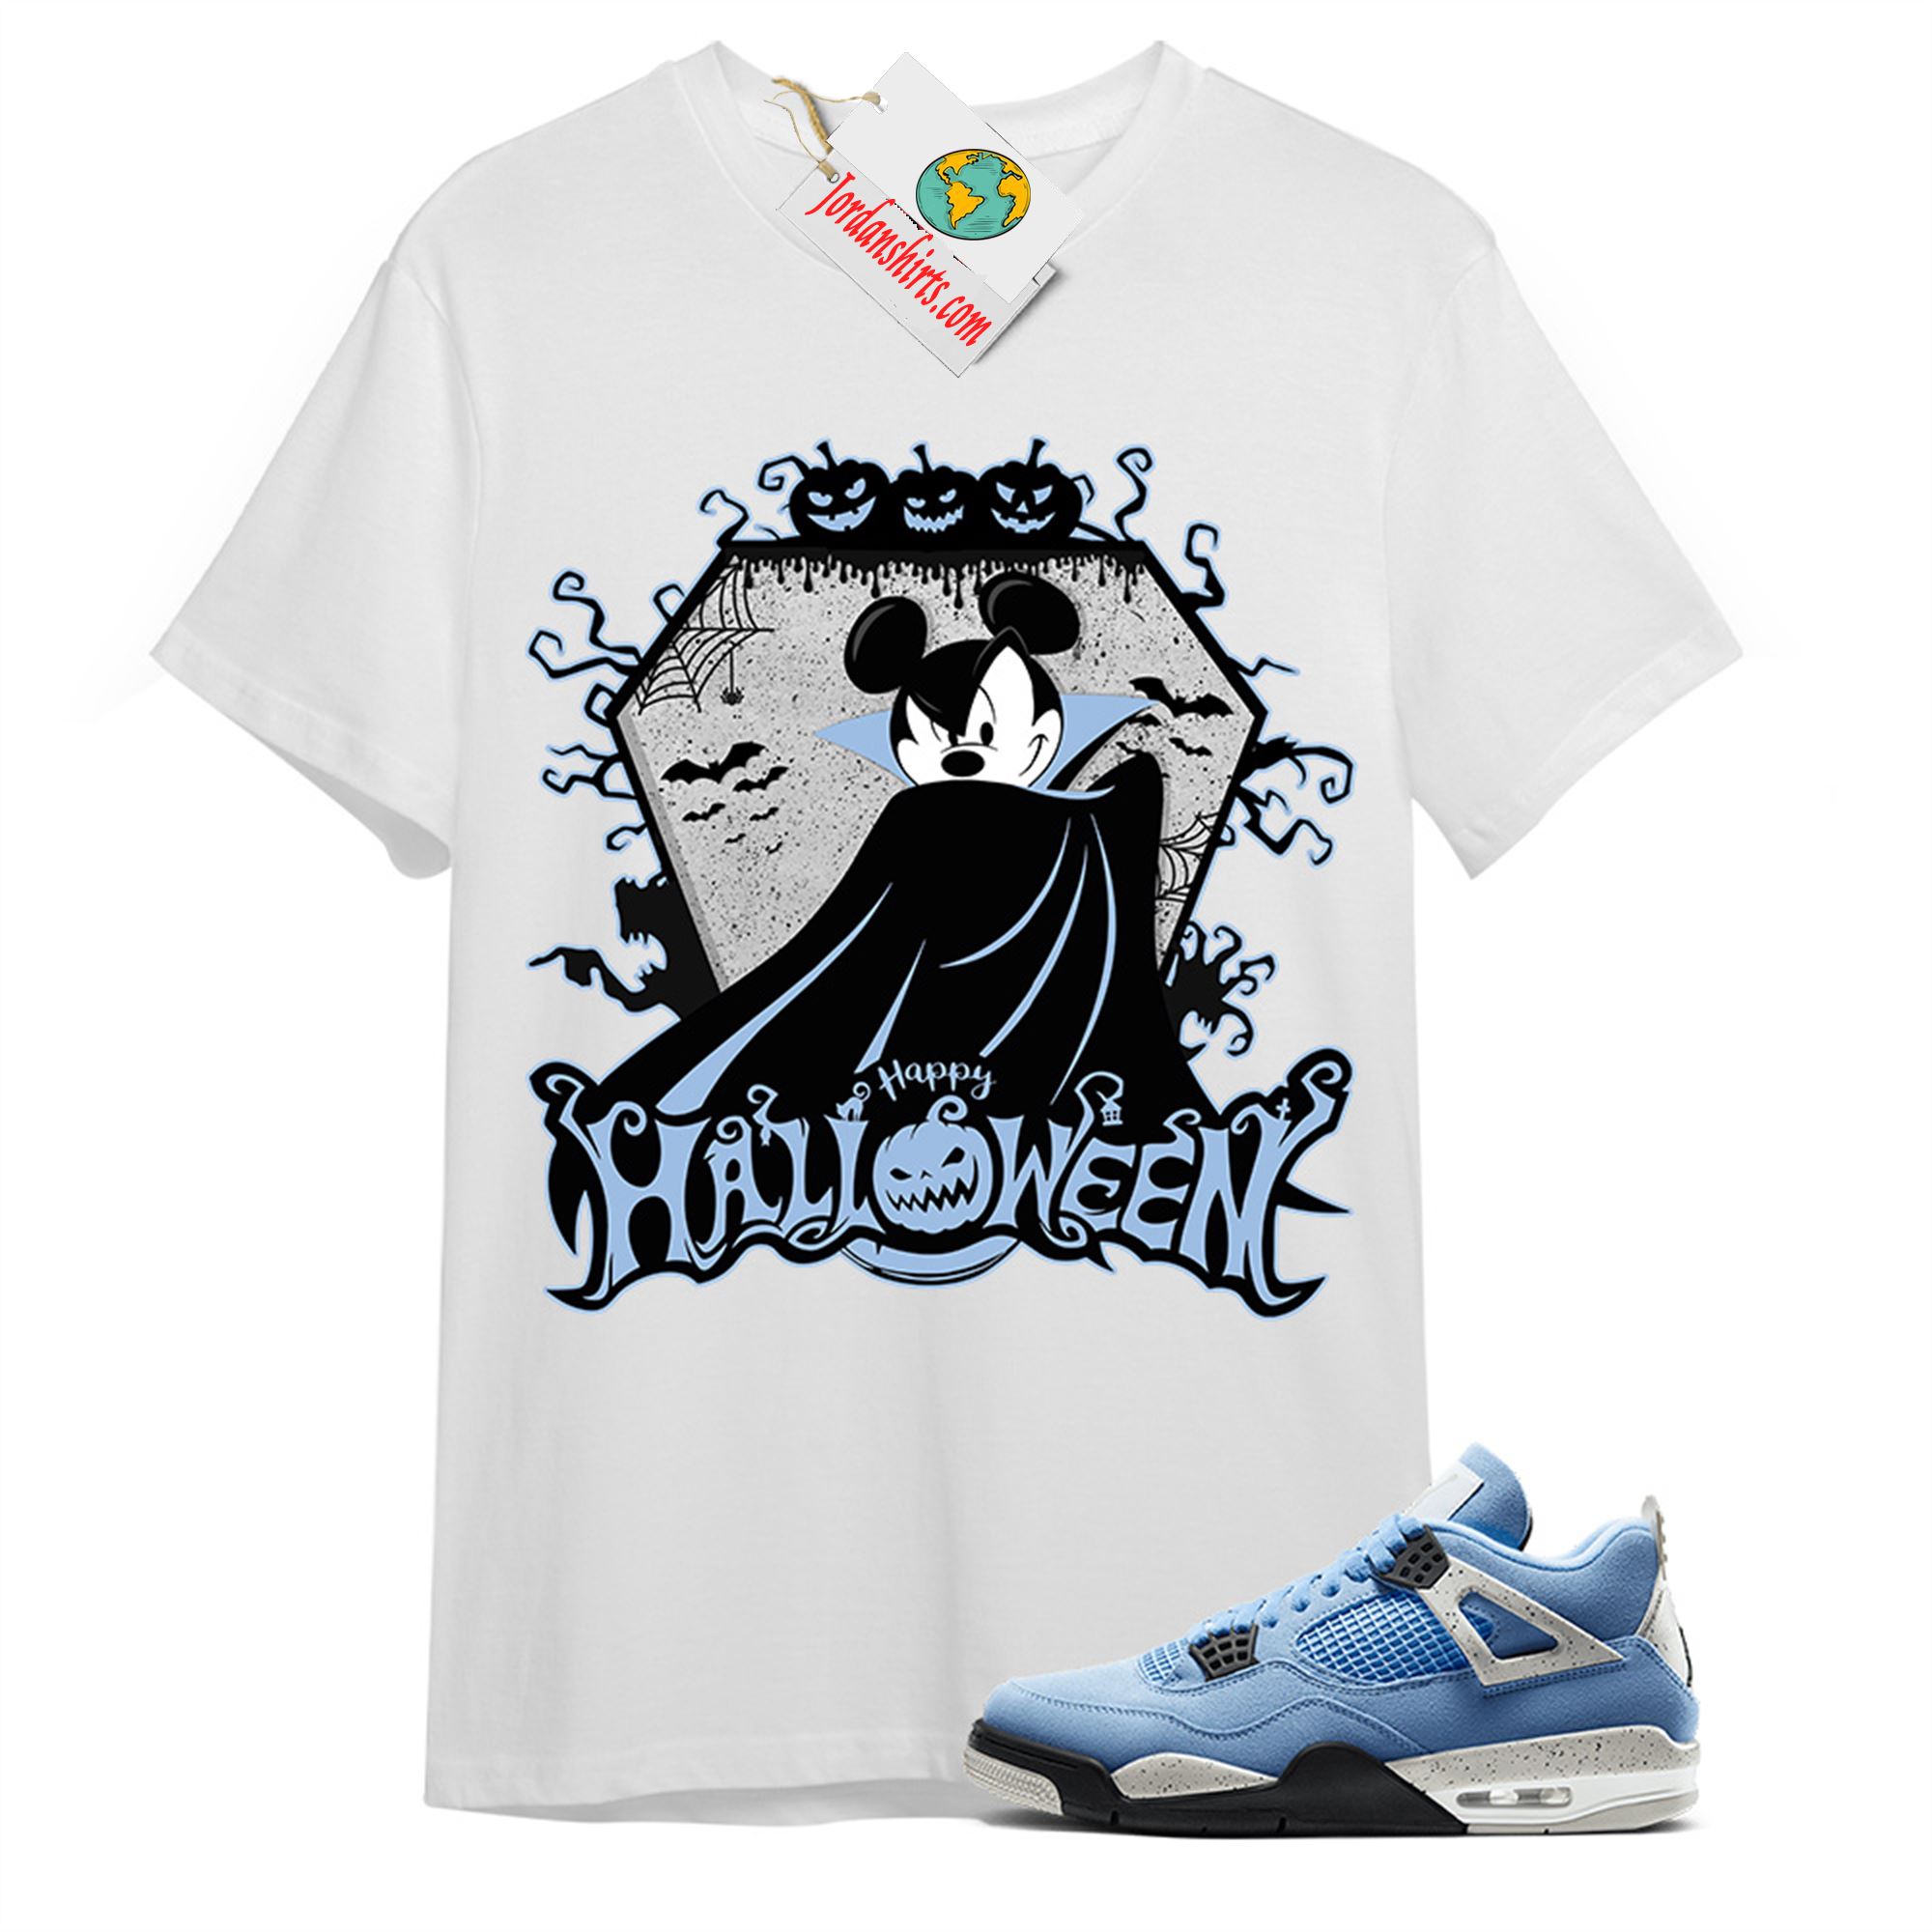 Jordan 4 Shirt, Dracula Mickey White T-shirt Air Jordan 4 University Blue 4s Size Up To 5xl